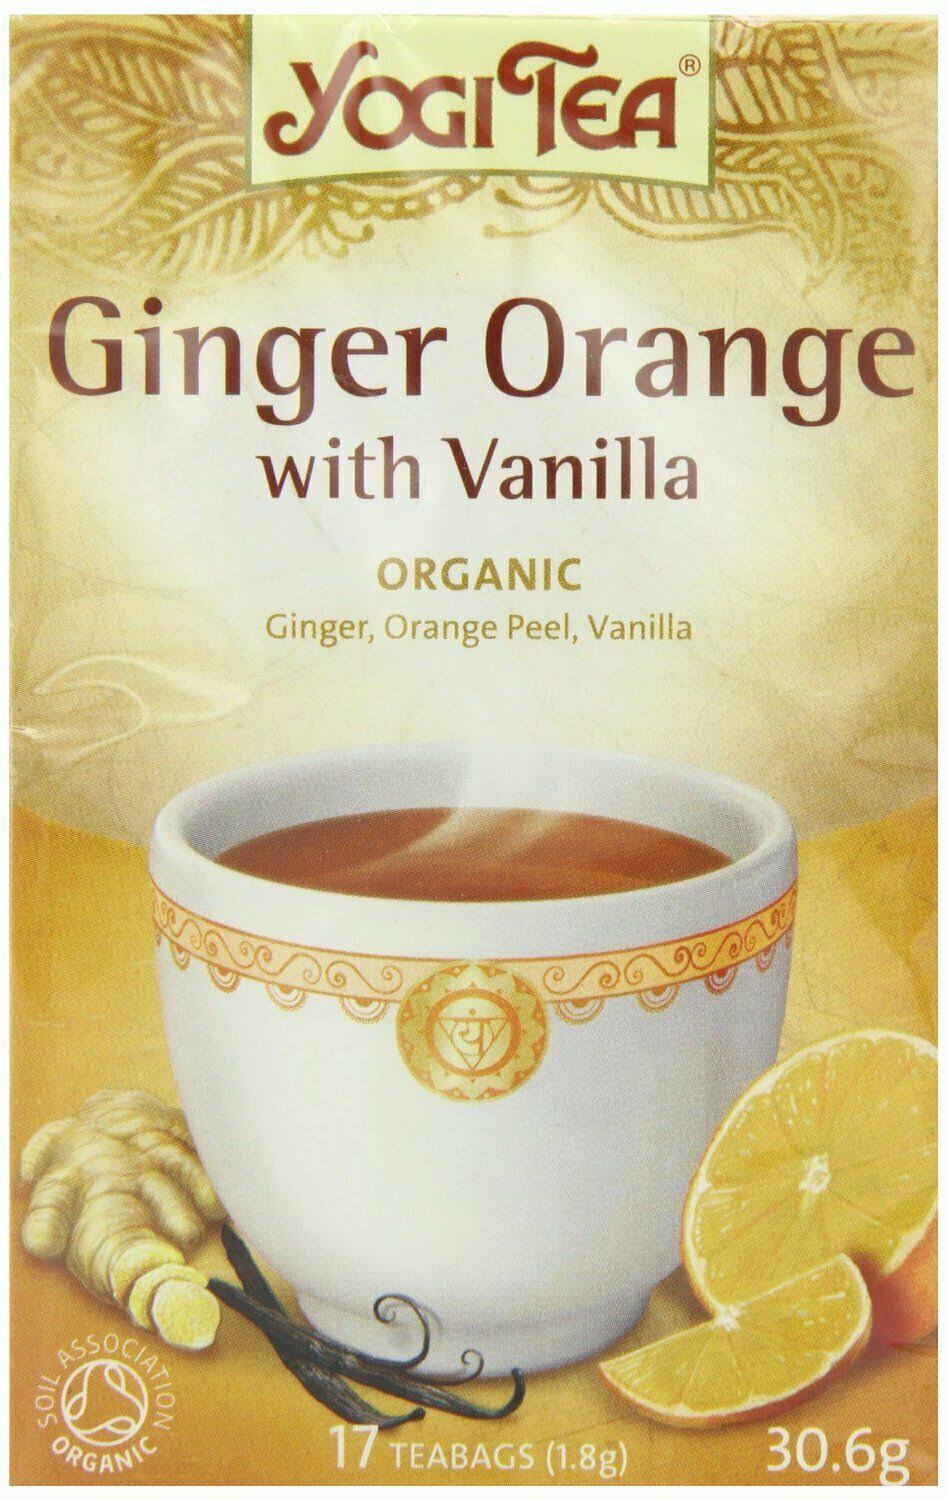 Yogi Tea - Ginger Orange with Vanilla, 17 Teabags, 30.6g